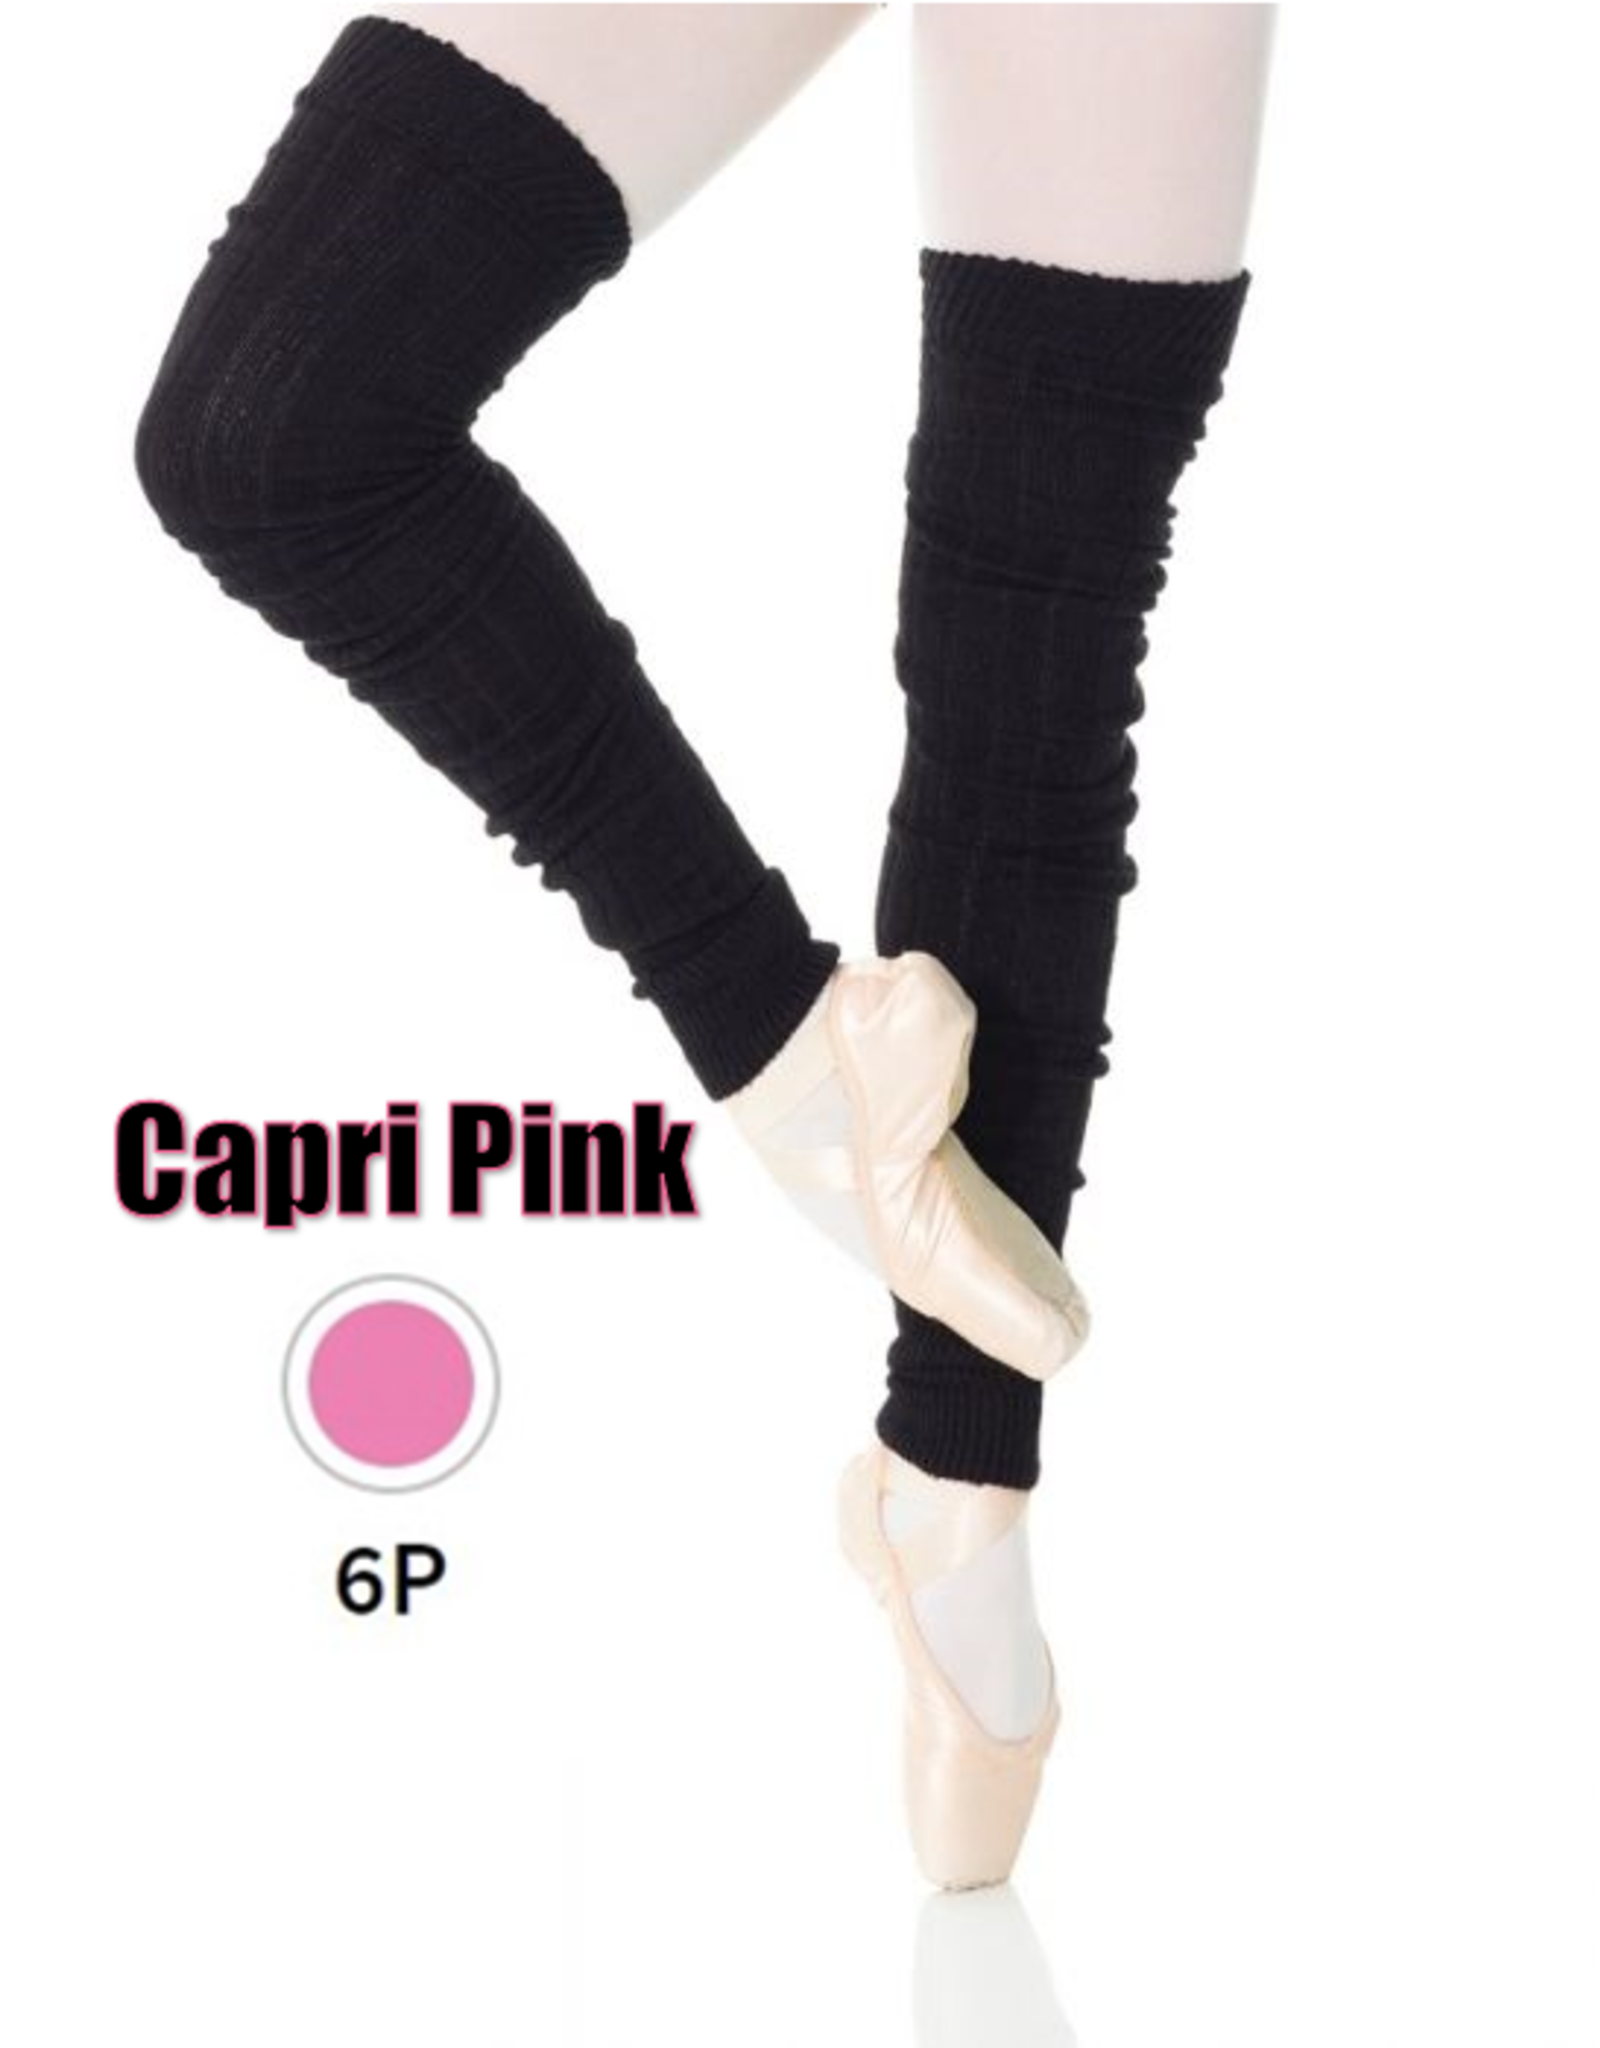 Mondor Legwarmers - 6P Capri Pink